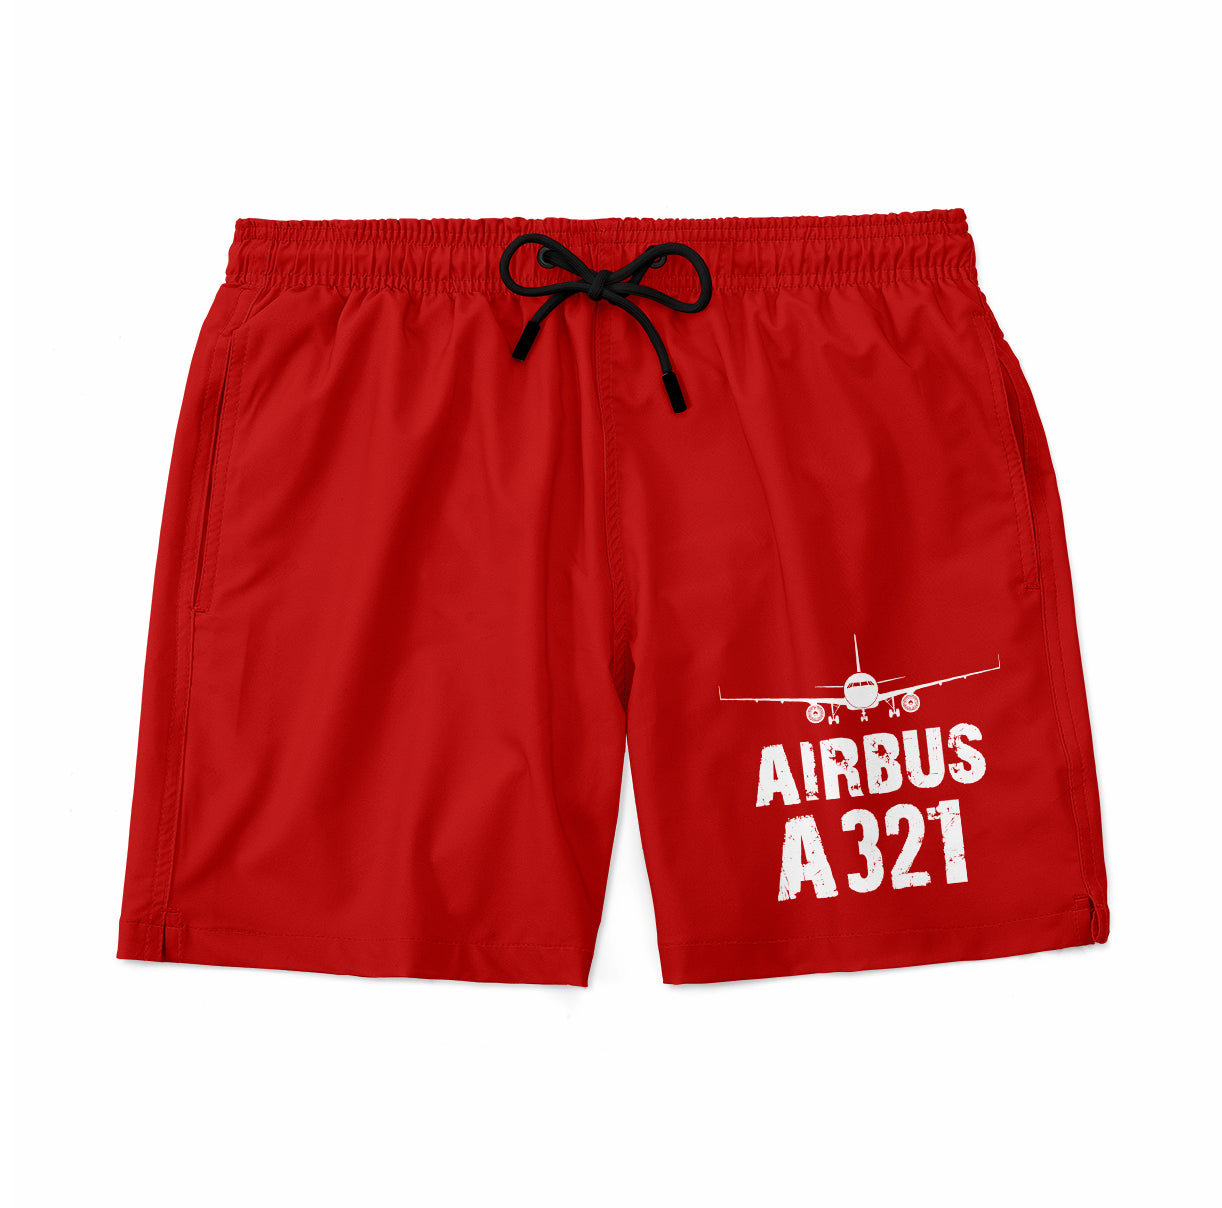 Airbus A321 & Plane Designed Swim Trunks & Shorts